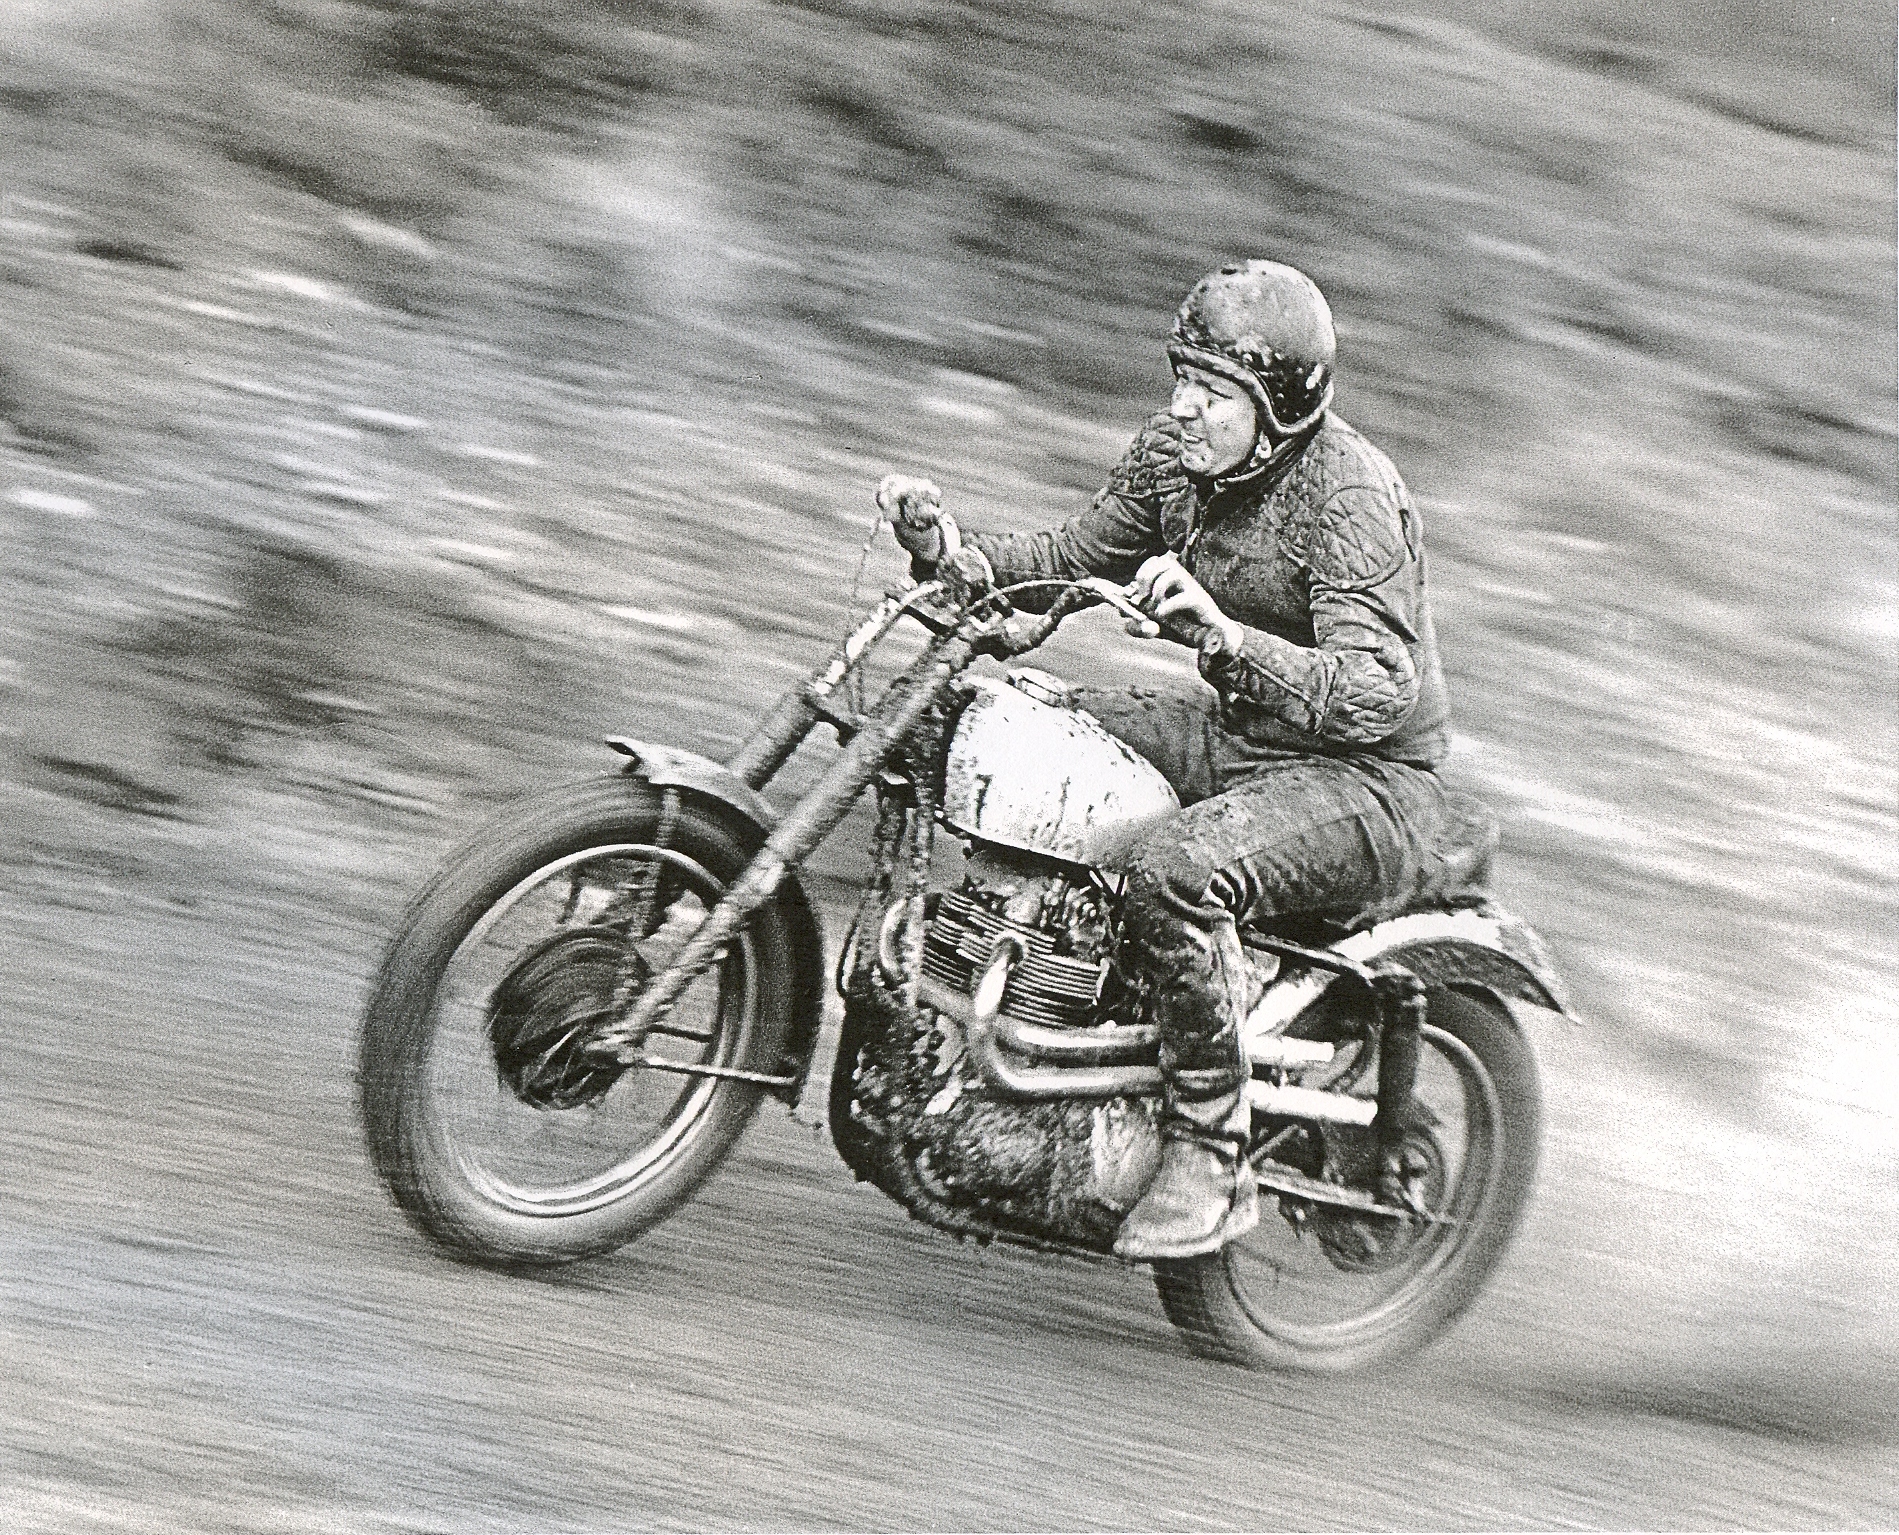 Deeley Exhibition 1900 - 1950 Vintage Motorcycle Collection